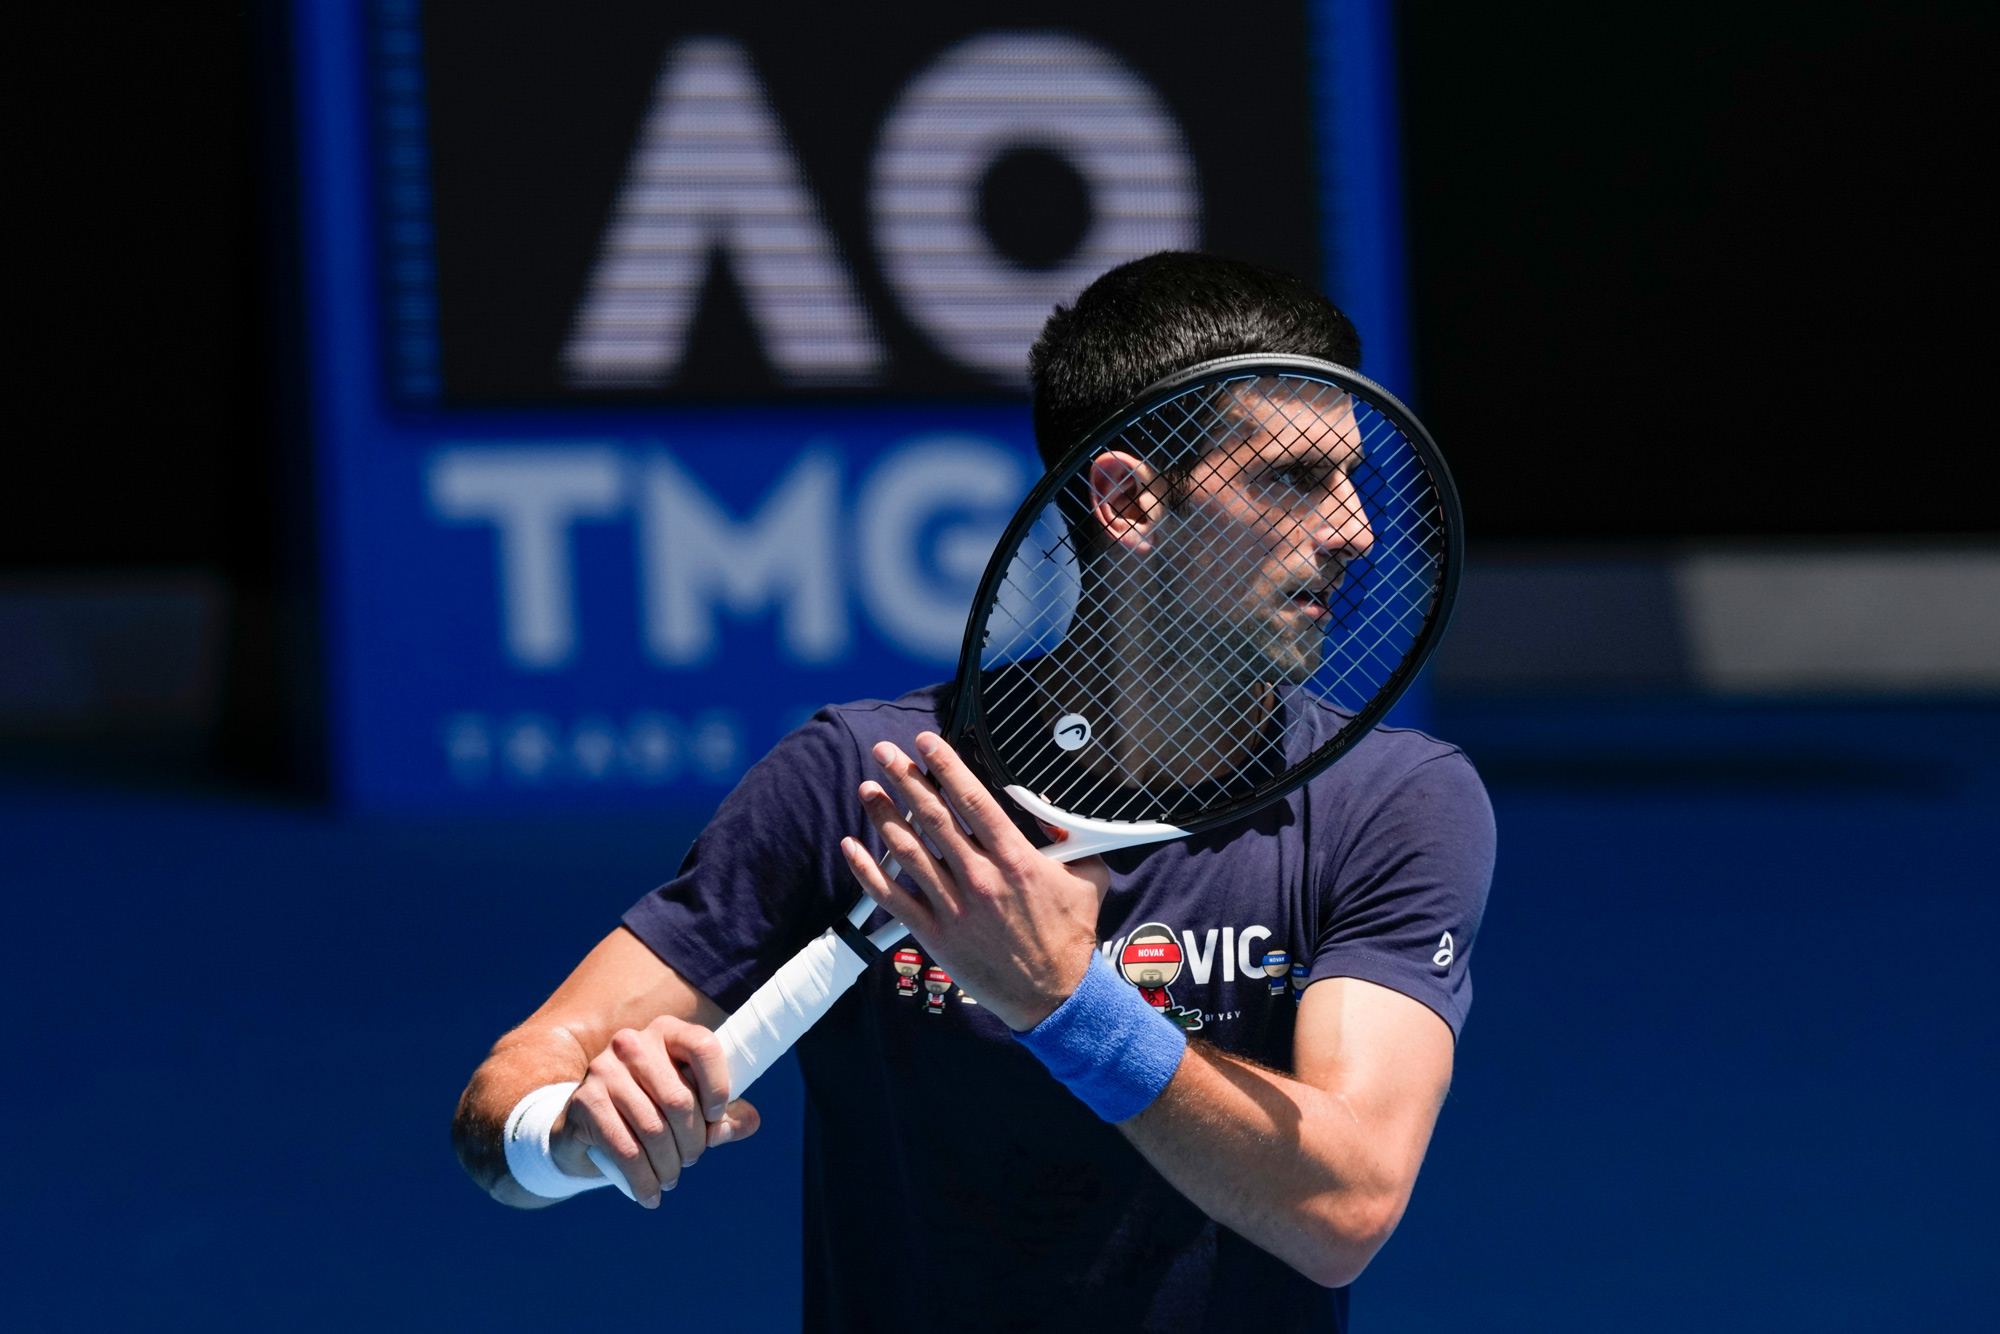 Novak Djokovic practices on Rod Laver Arena ahead of the Australian Open tennis championship in Melbourne, Australia, on January 12.